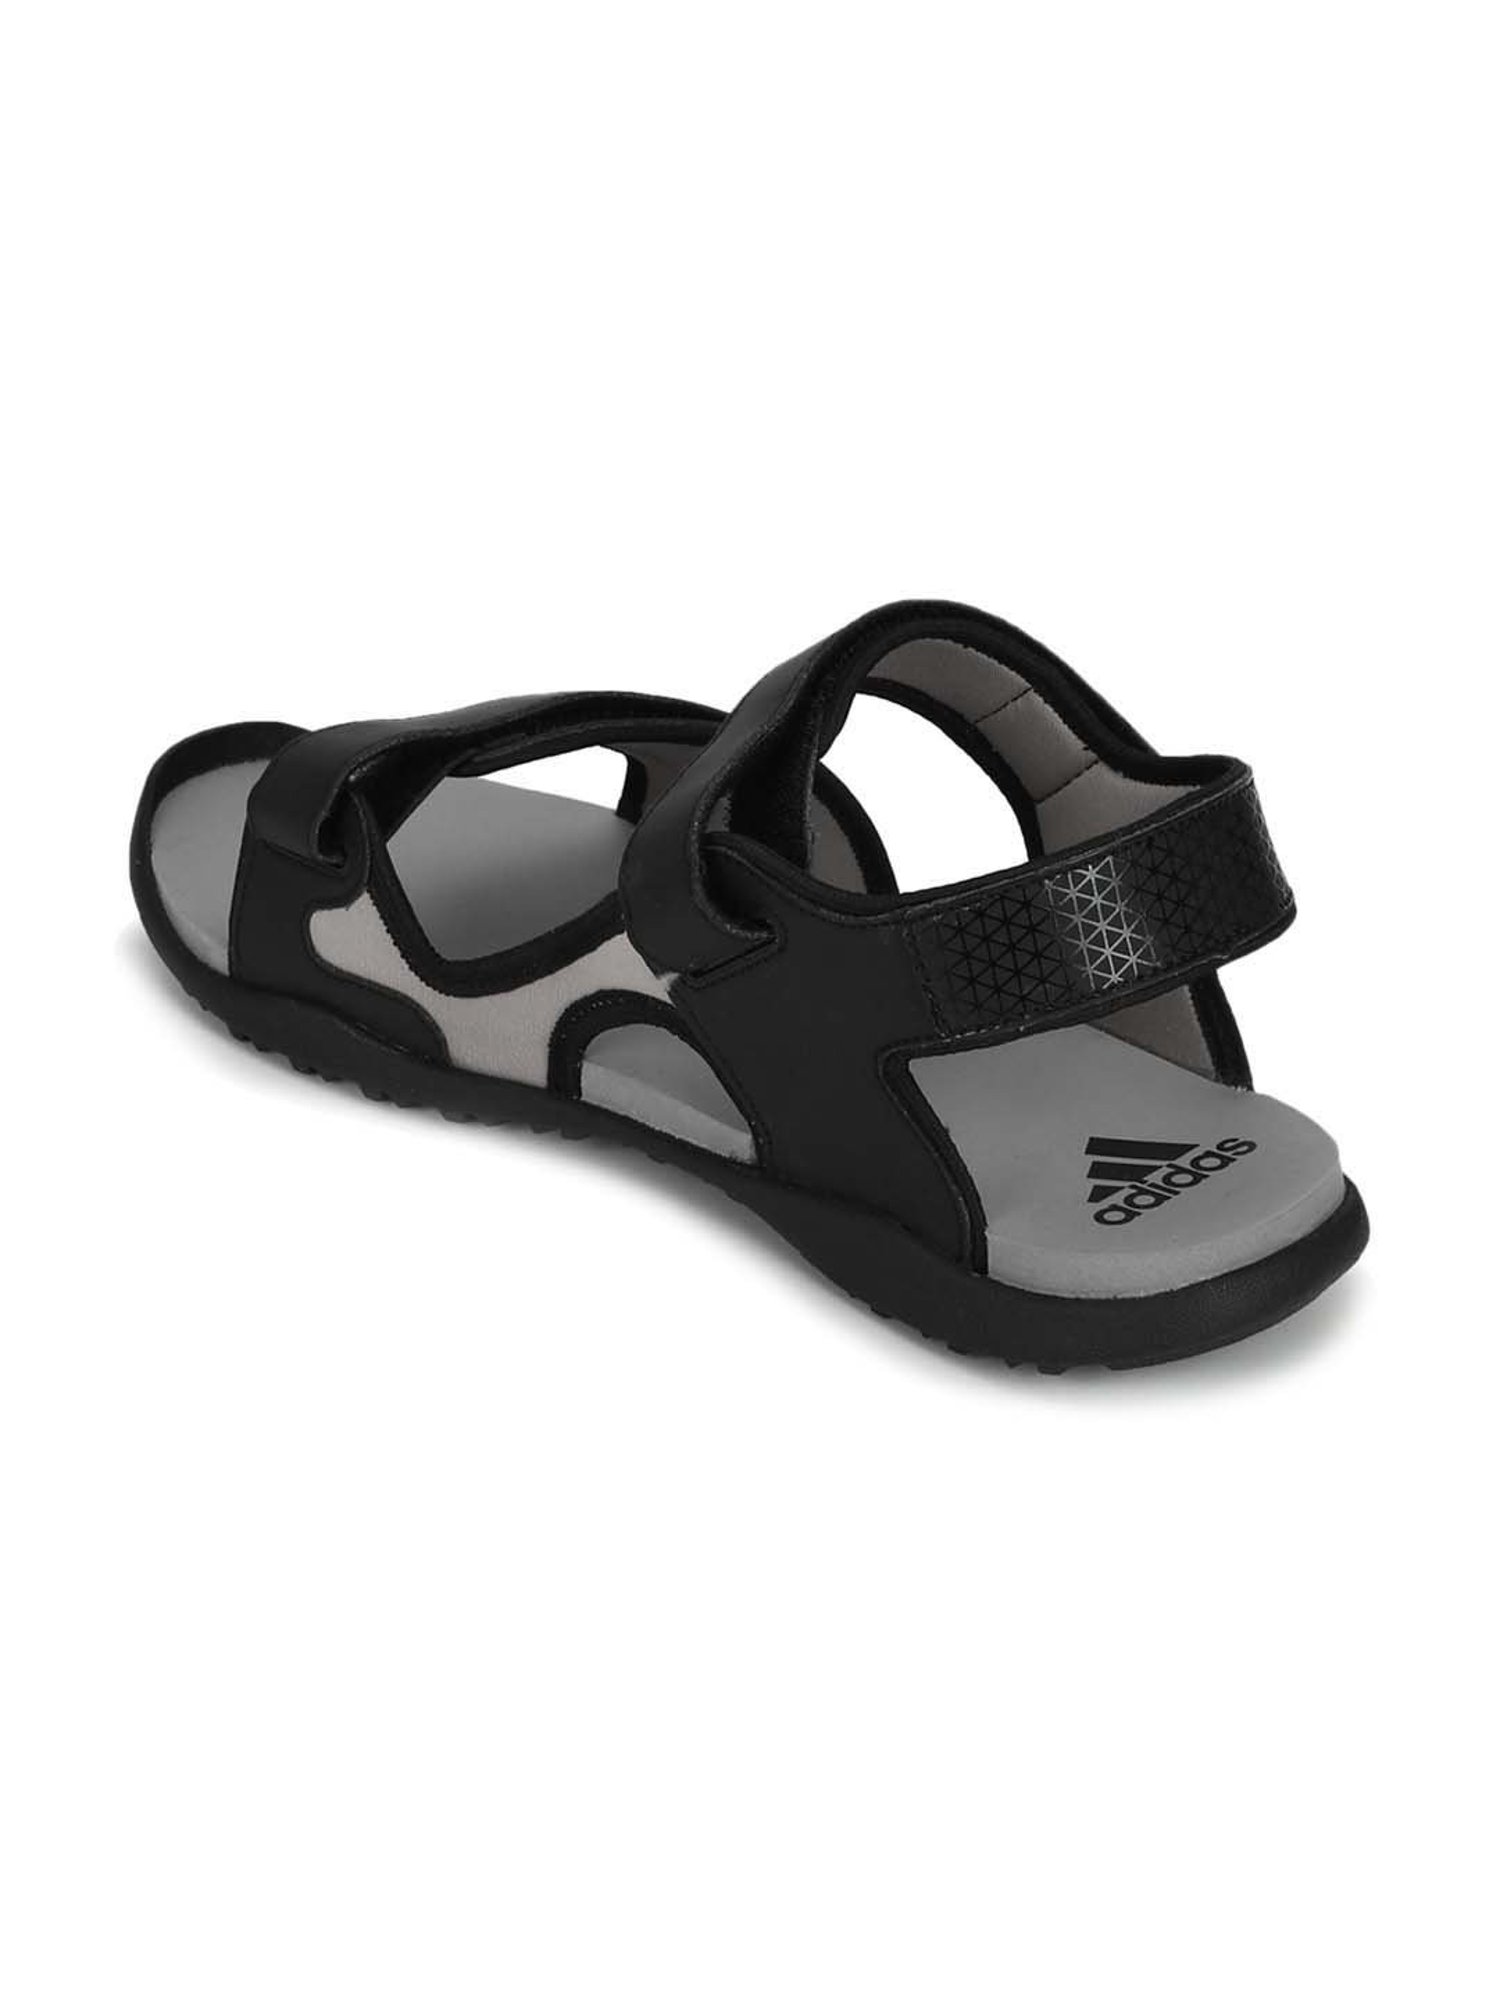 Buy Power Men Black Sports Sandals Online